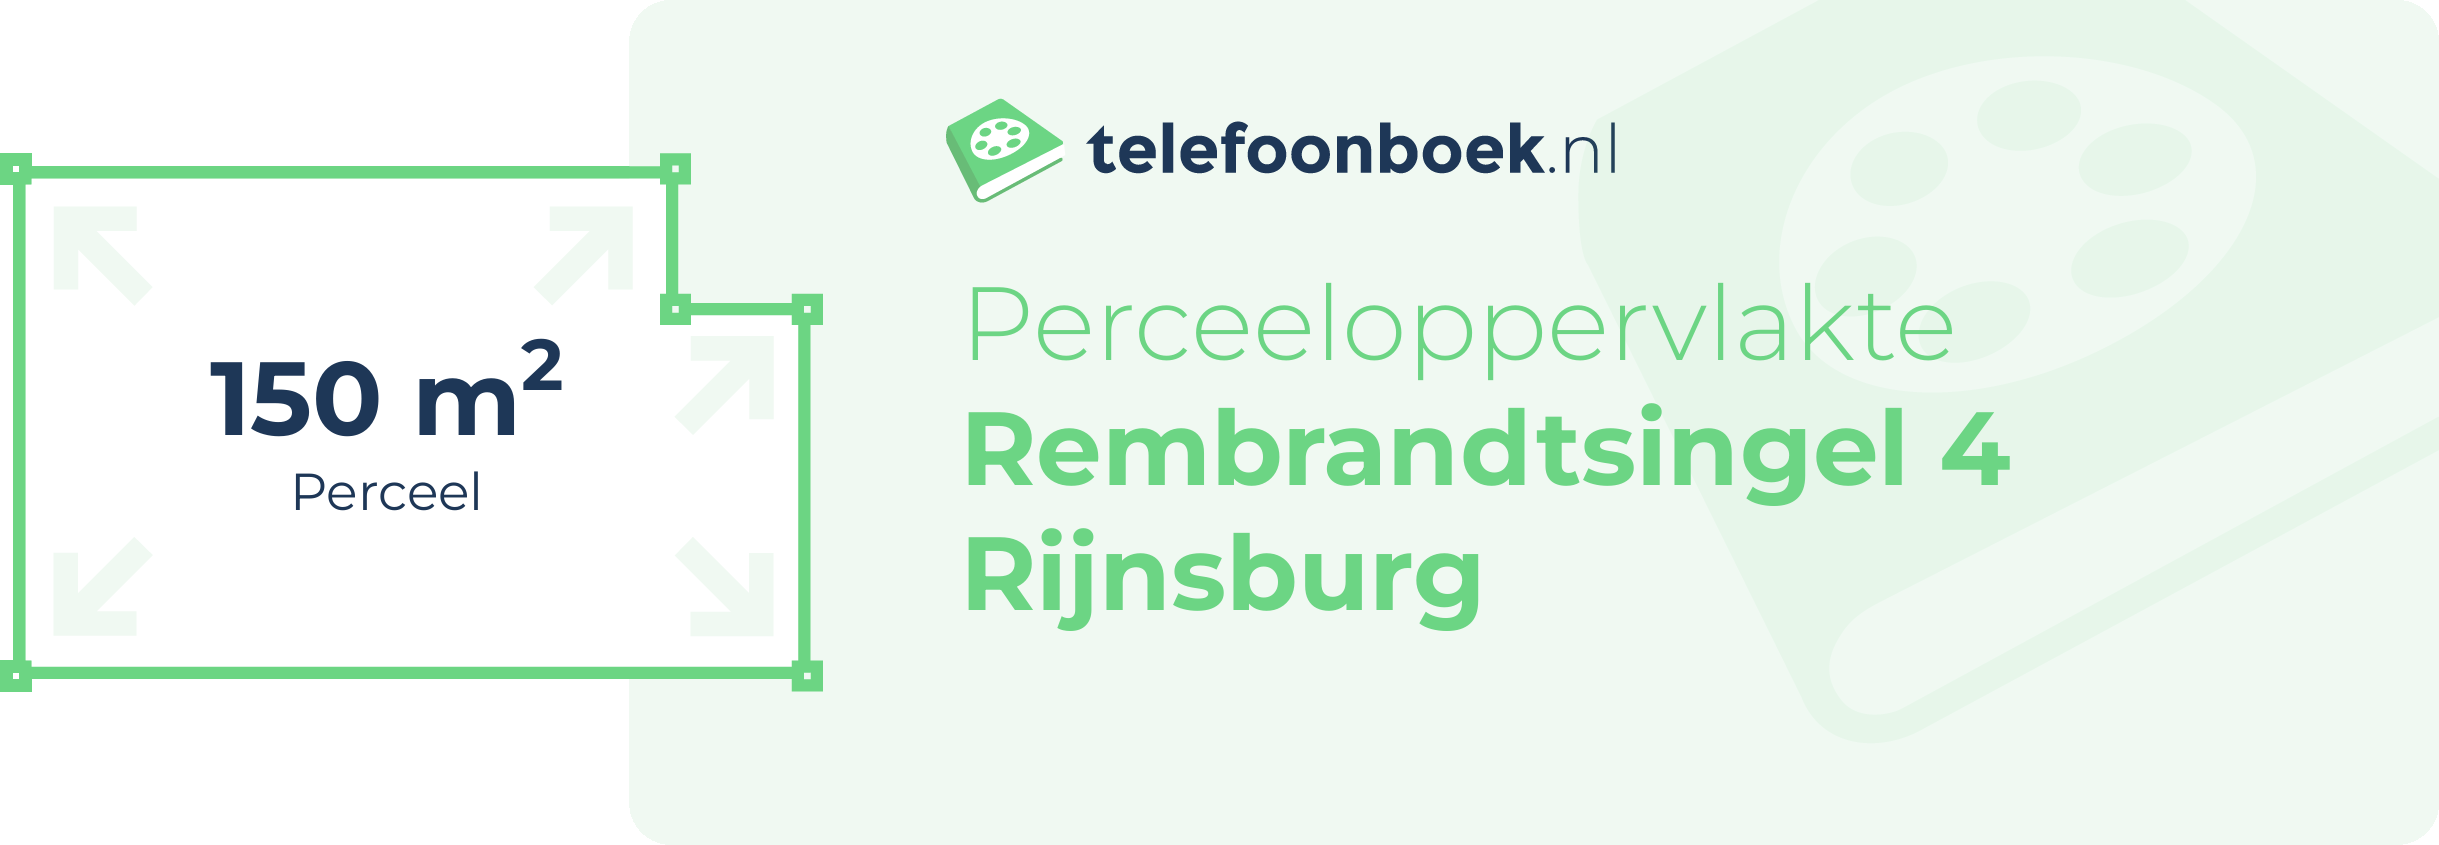 Perceeloppervlakte Rembrandtsingel 4 Rijnsburg